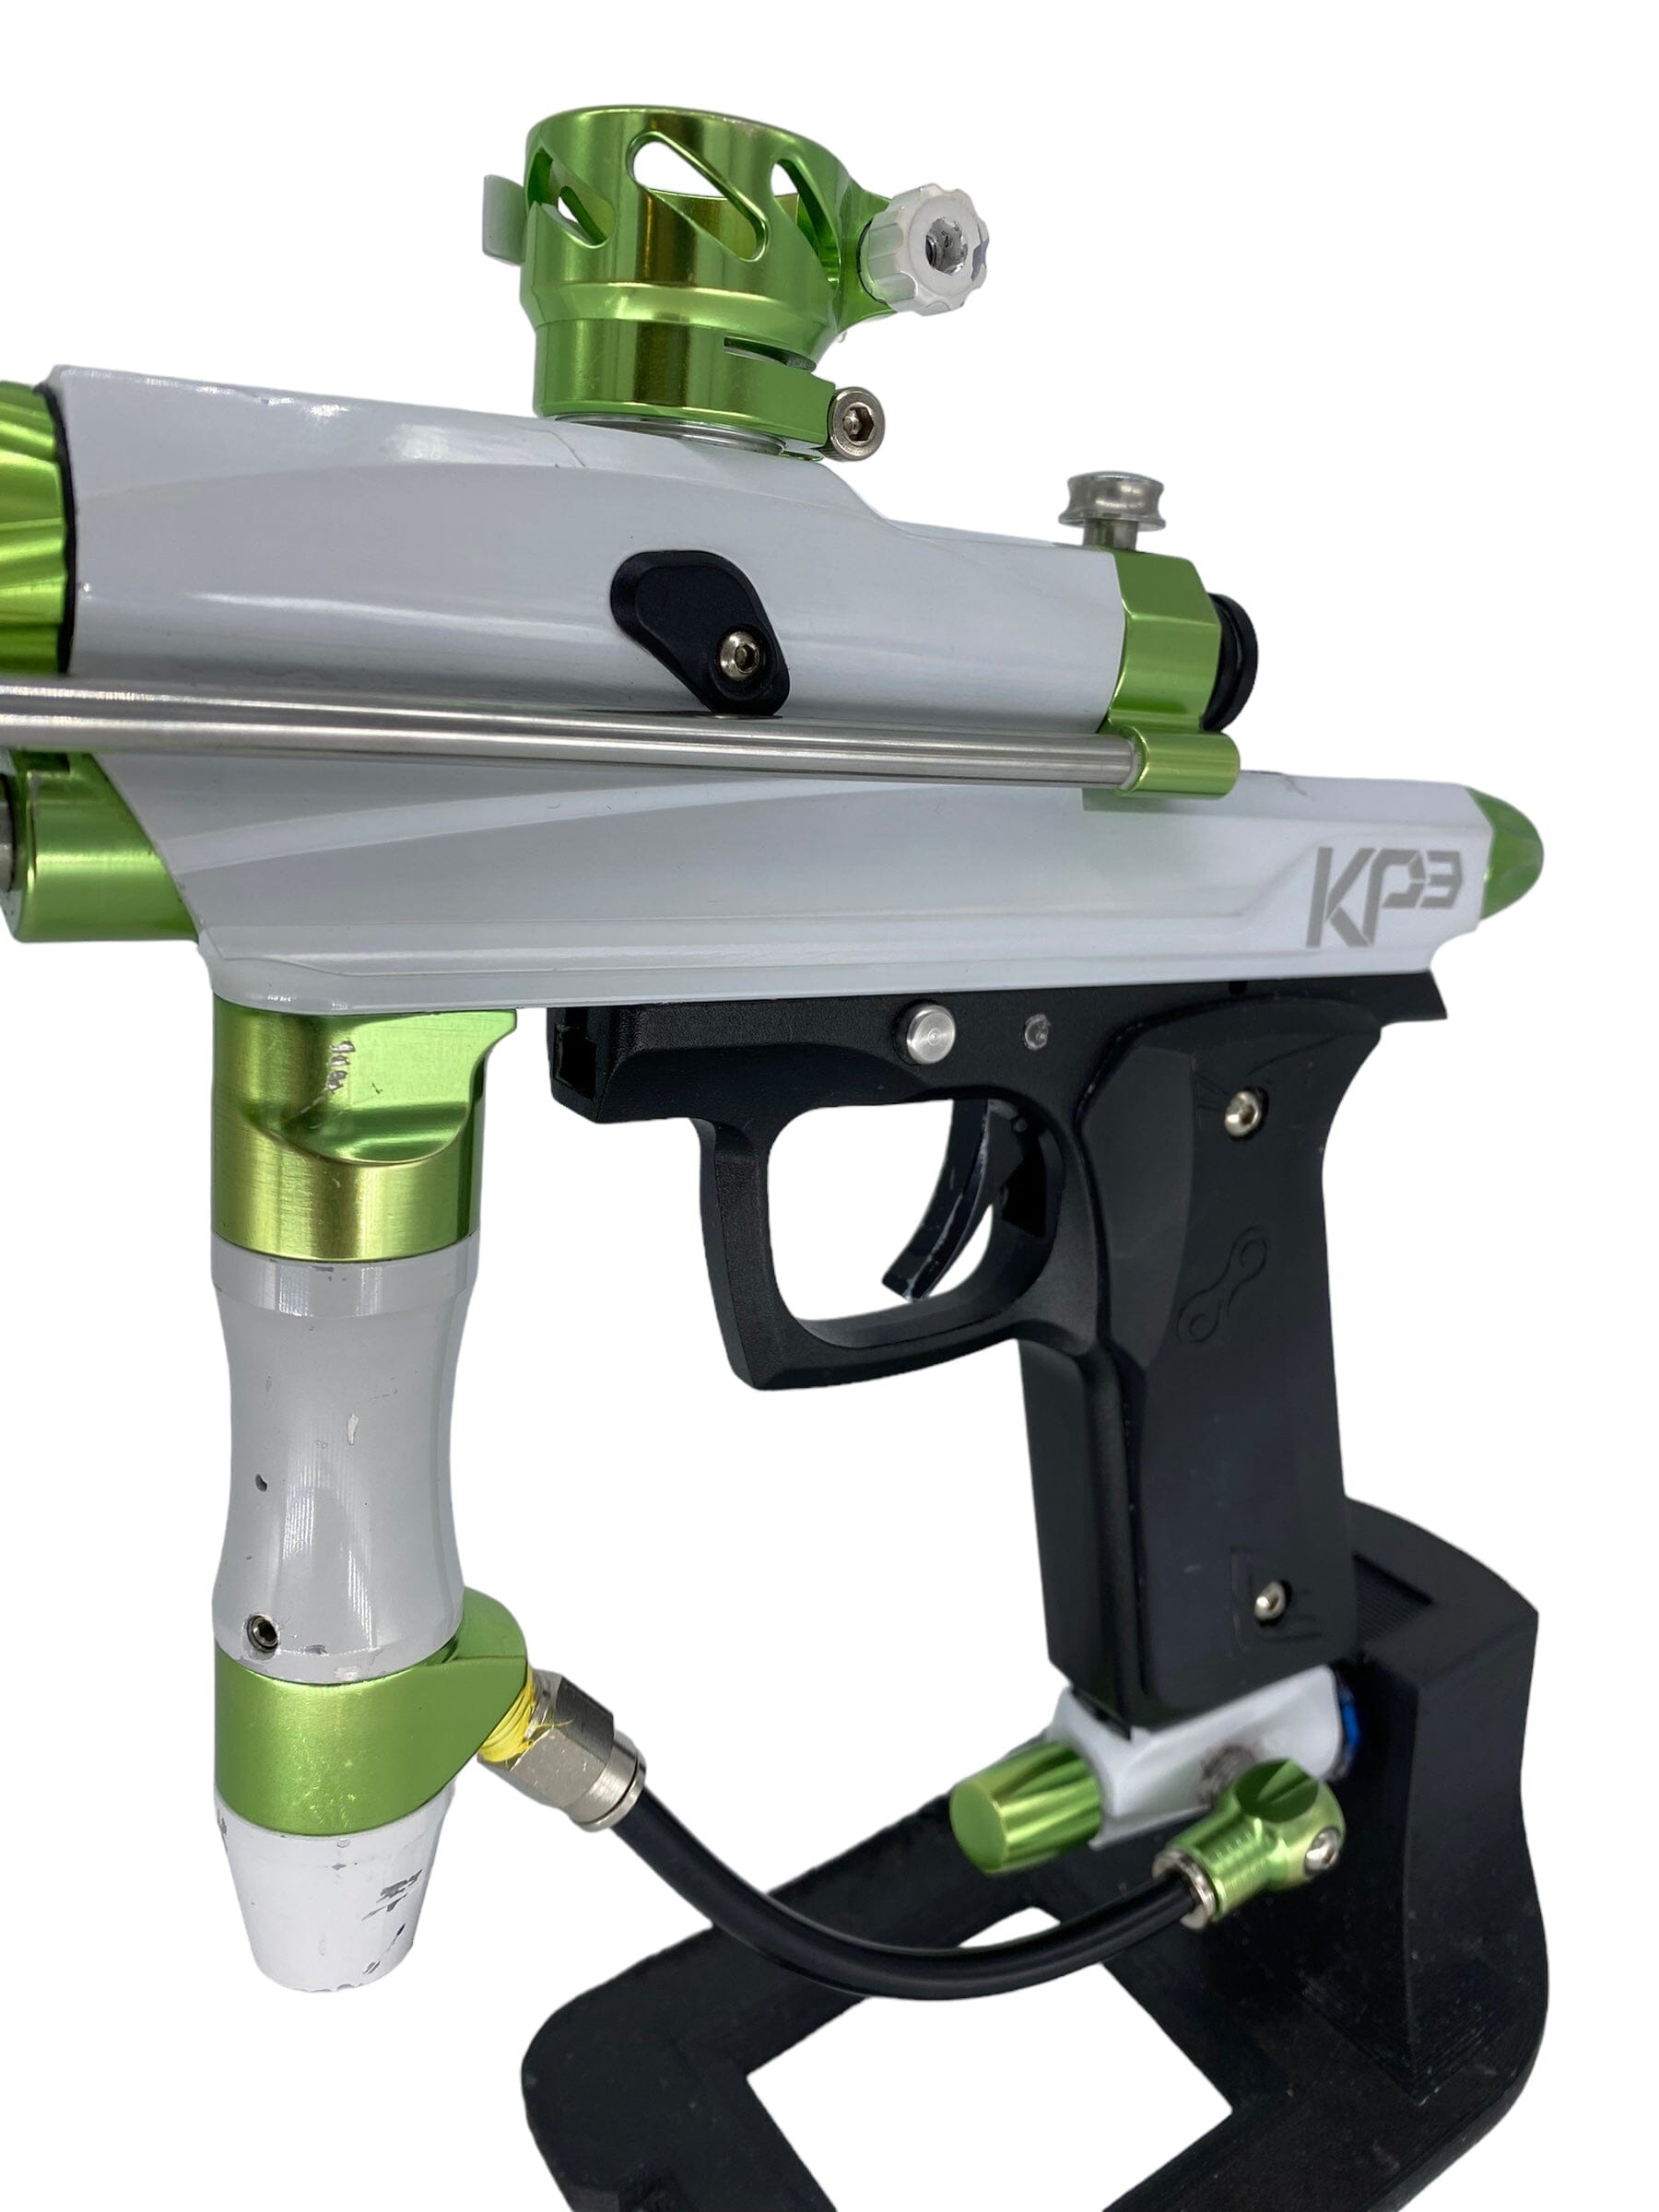 Used Azodin Kp3 Pump Paintball Gun Paintball Gun from CPXBrosPaintball Buy/Sell/Trade Paintball Markers, New Paintball Guns, Paintball Hoppers, Paintball Masks, and Hormesis Headbands